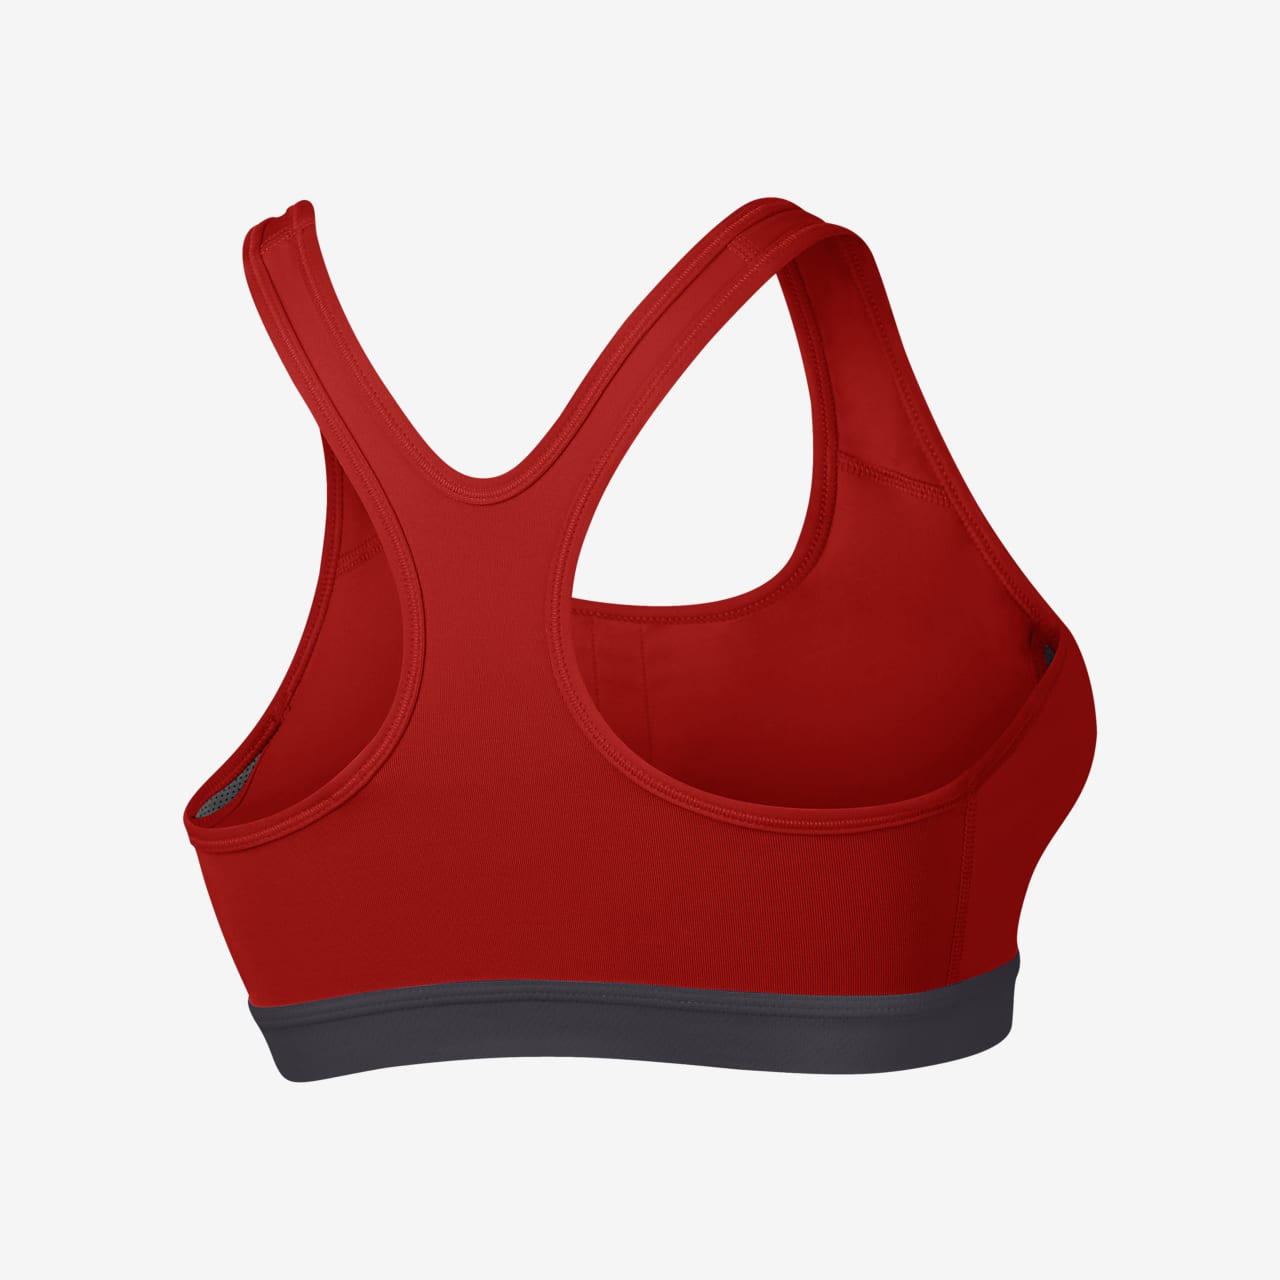 nike women's pro classic padded compression sports bra